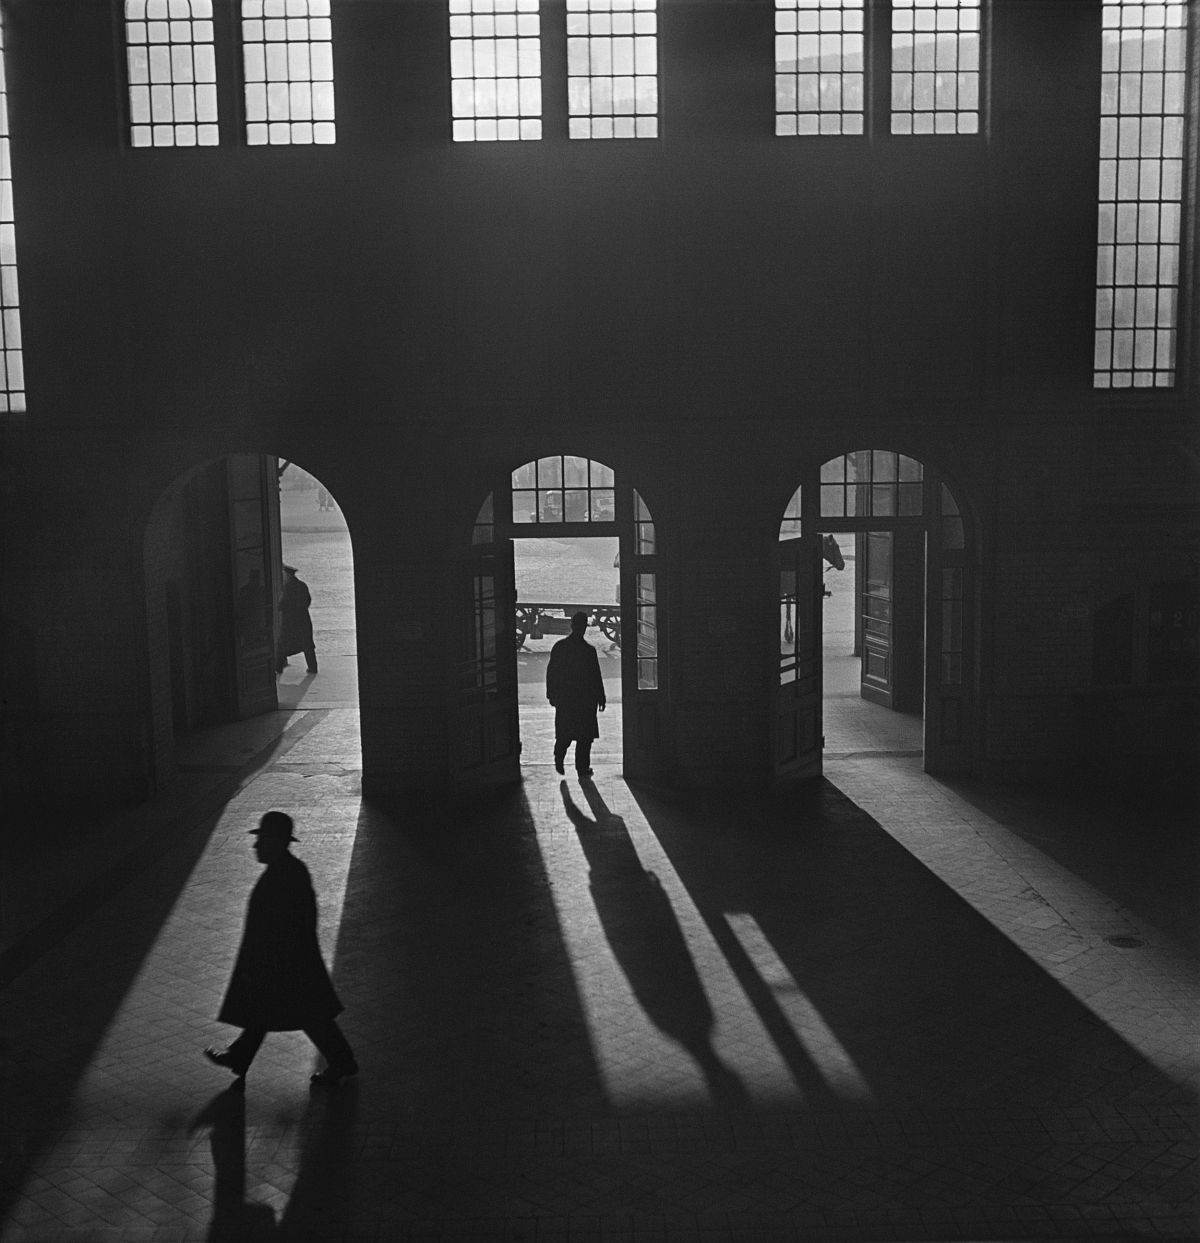 Roman Vishniac, [Interior of the Anhalter Bahnhof railway terminus, near Potsdamer Platz, Berlin], late 1920searly 1930s. © Mara Vishniac Kohn. Courtesy International Center of Photography.